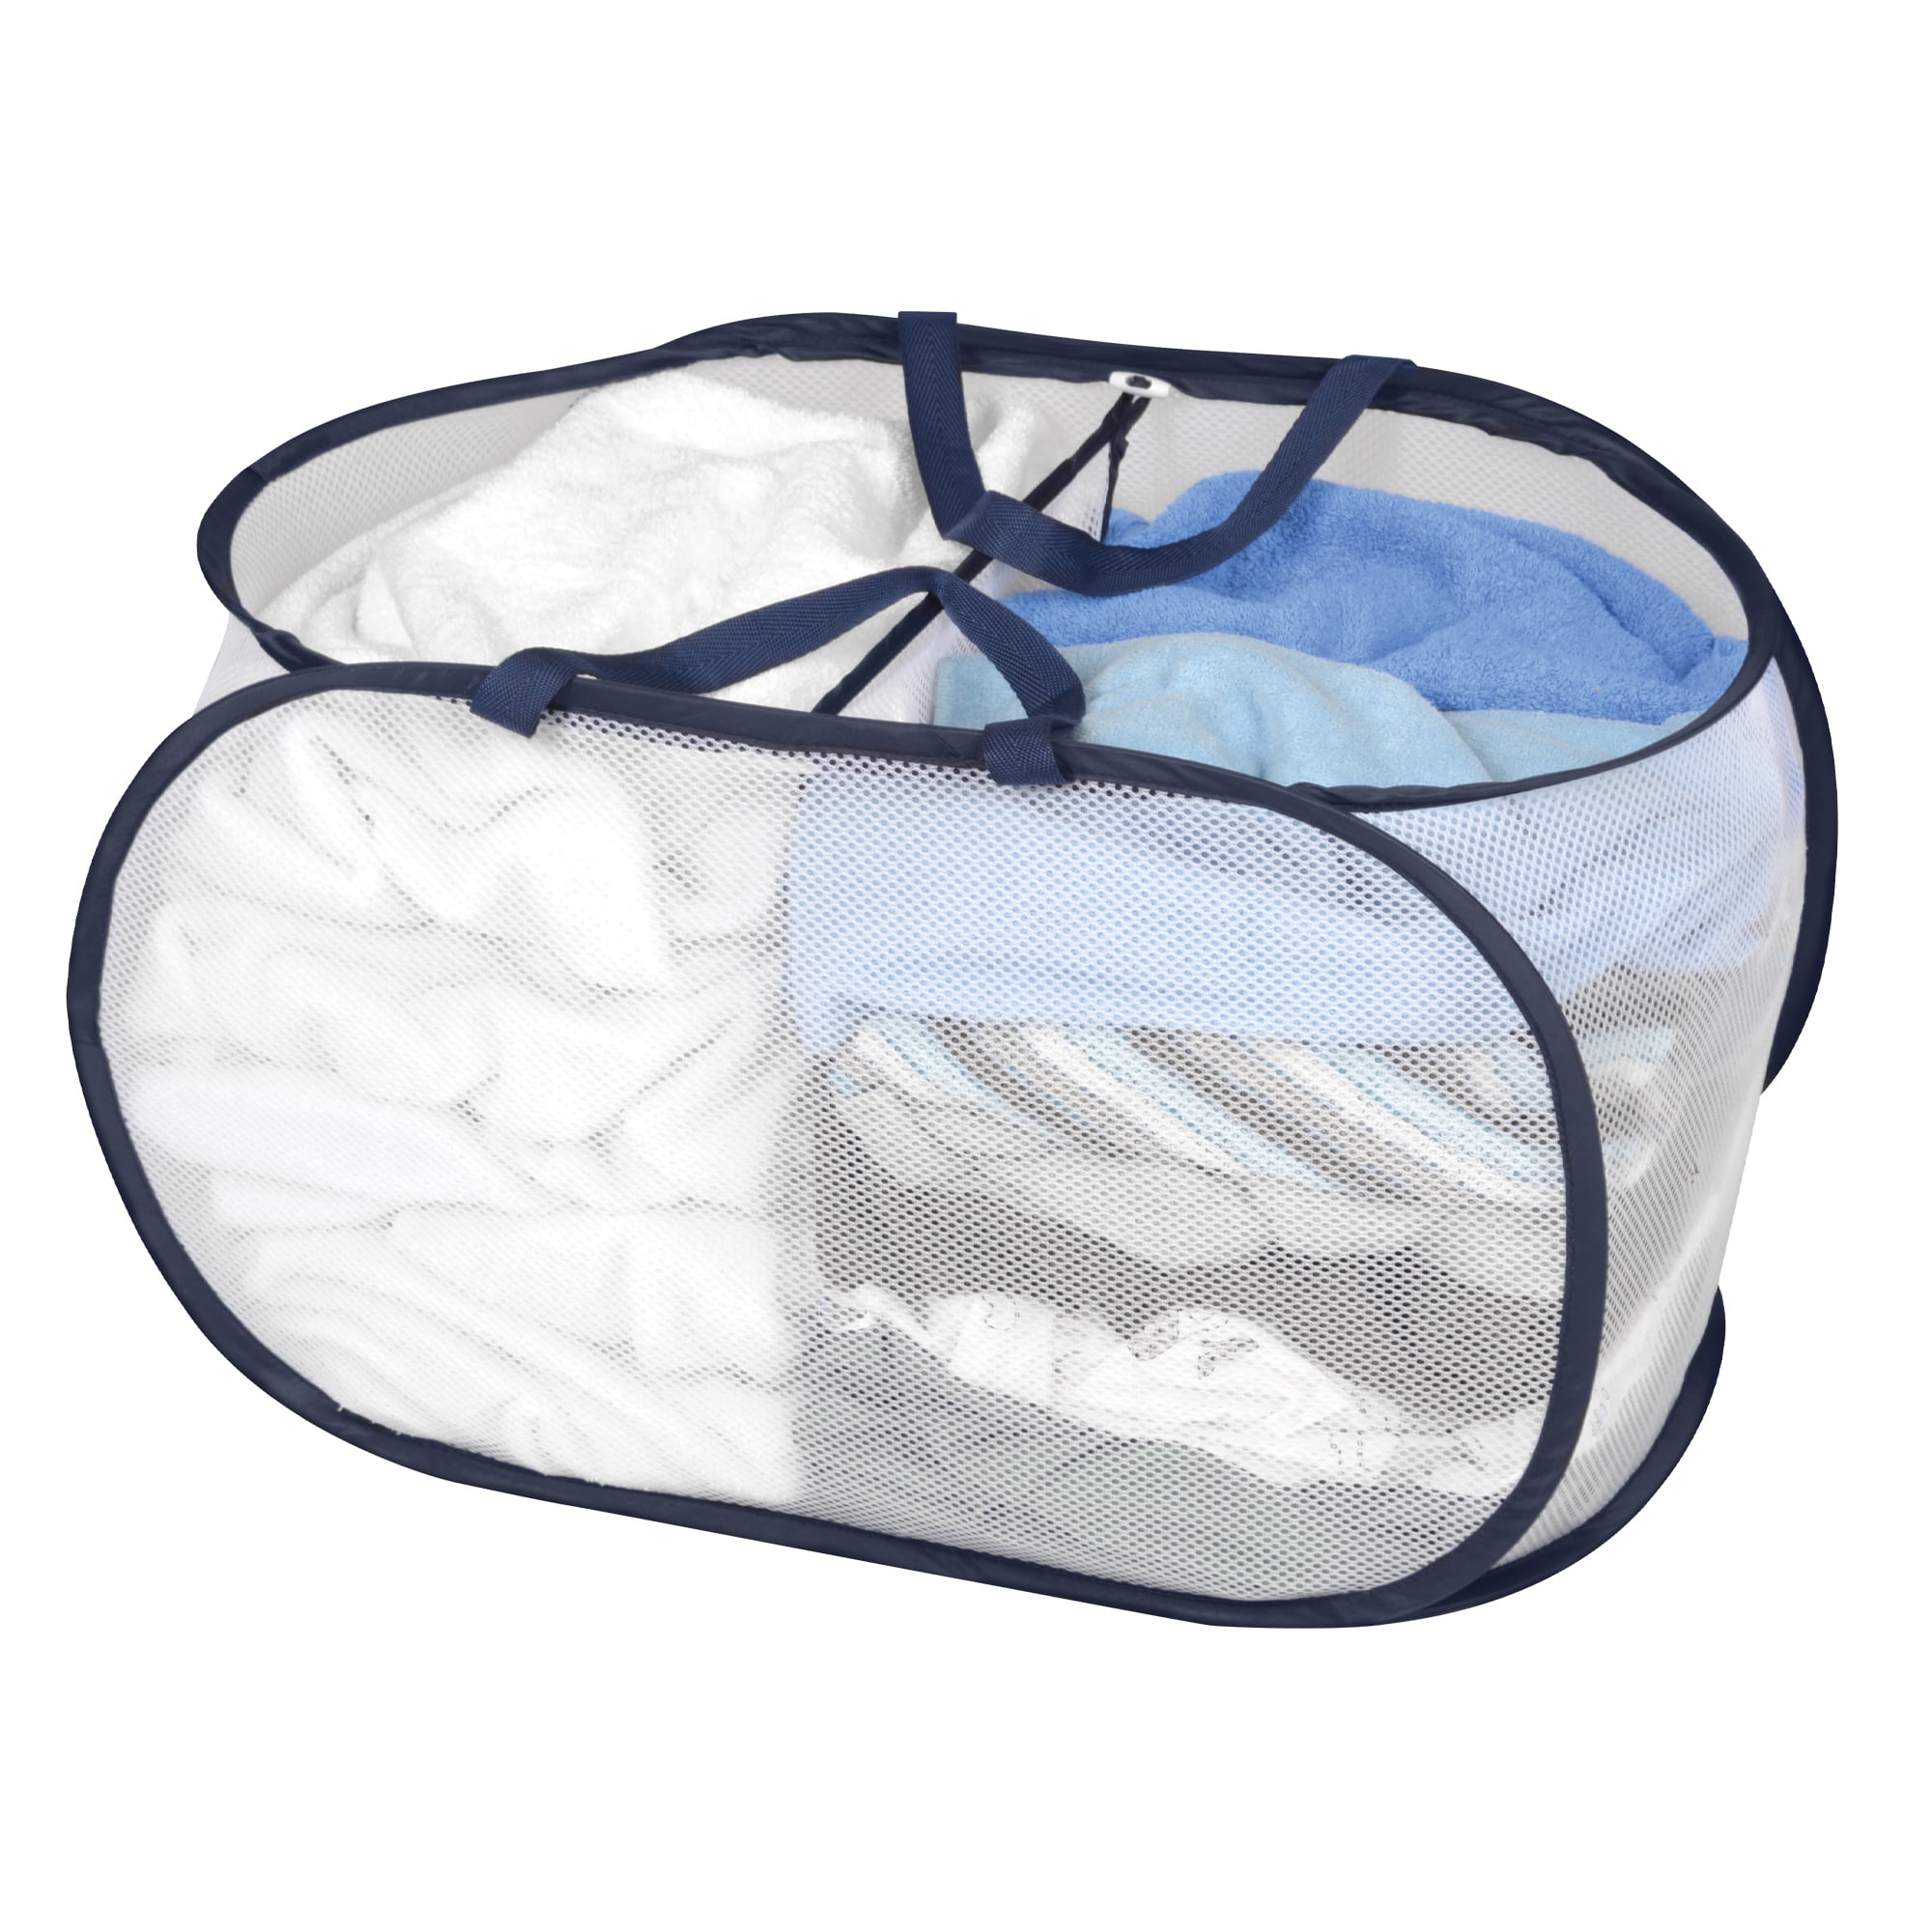 2 x Laundry Baskets Foldable Pop Up Mesh Washing Laundry Basket Bag Bin Hamper Toy Tidy Storage Organiser Organizer White 